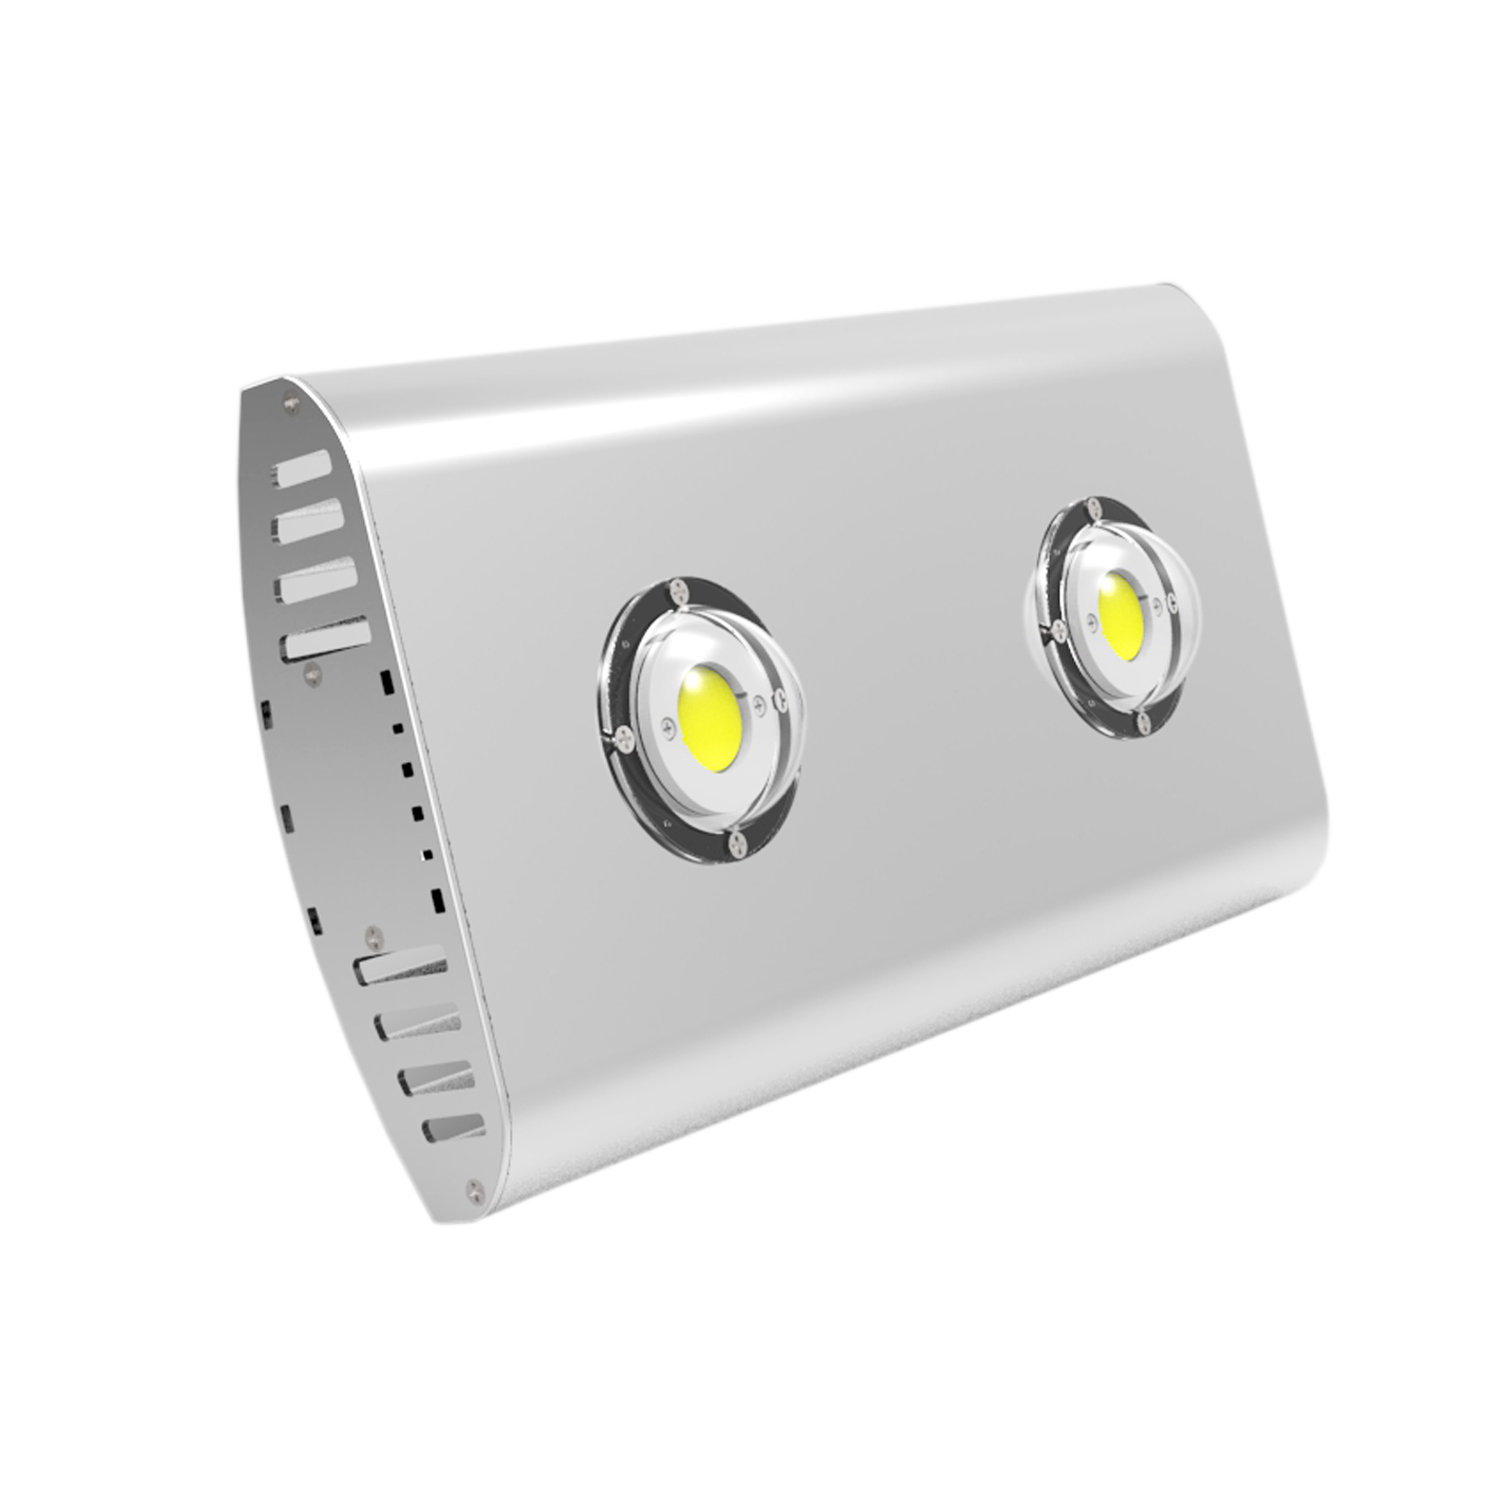 Aigostar - Confezione da 2 Faretto a LED COB, 80W, 7200LM, Impermeabile IP65, Luce Naturale 4000K[Classe di efficienza energetica A+]